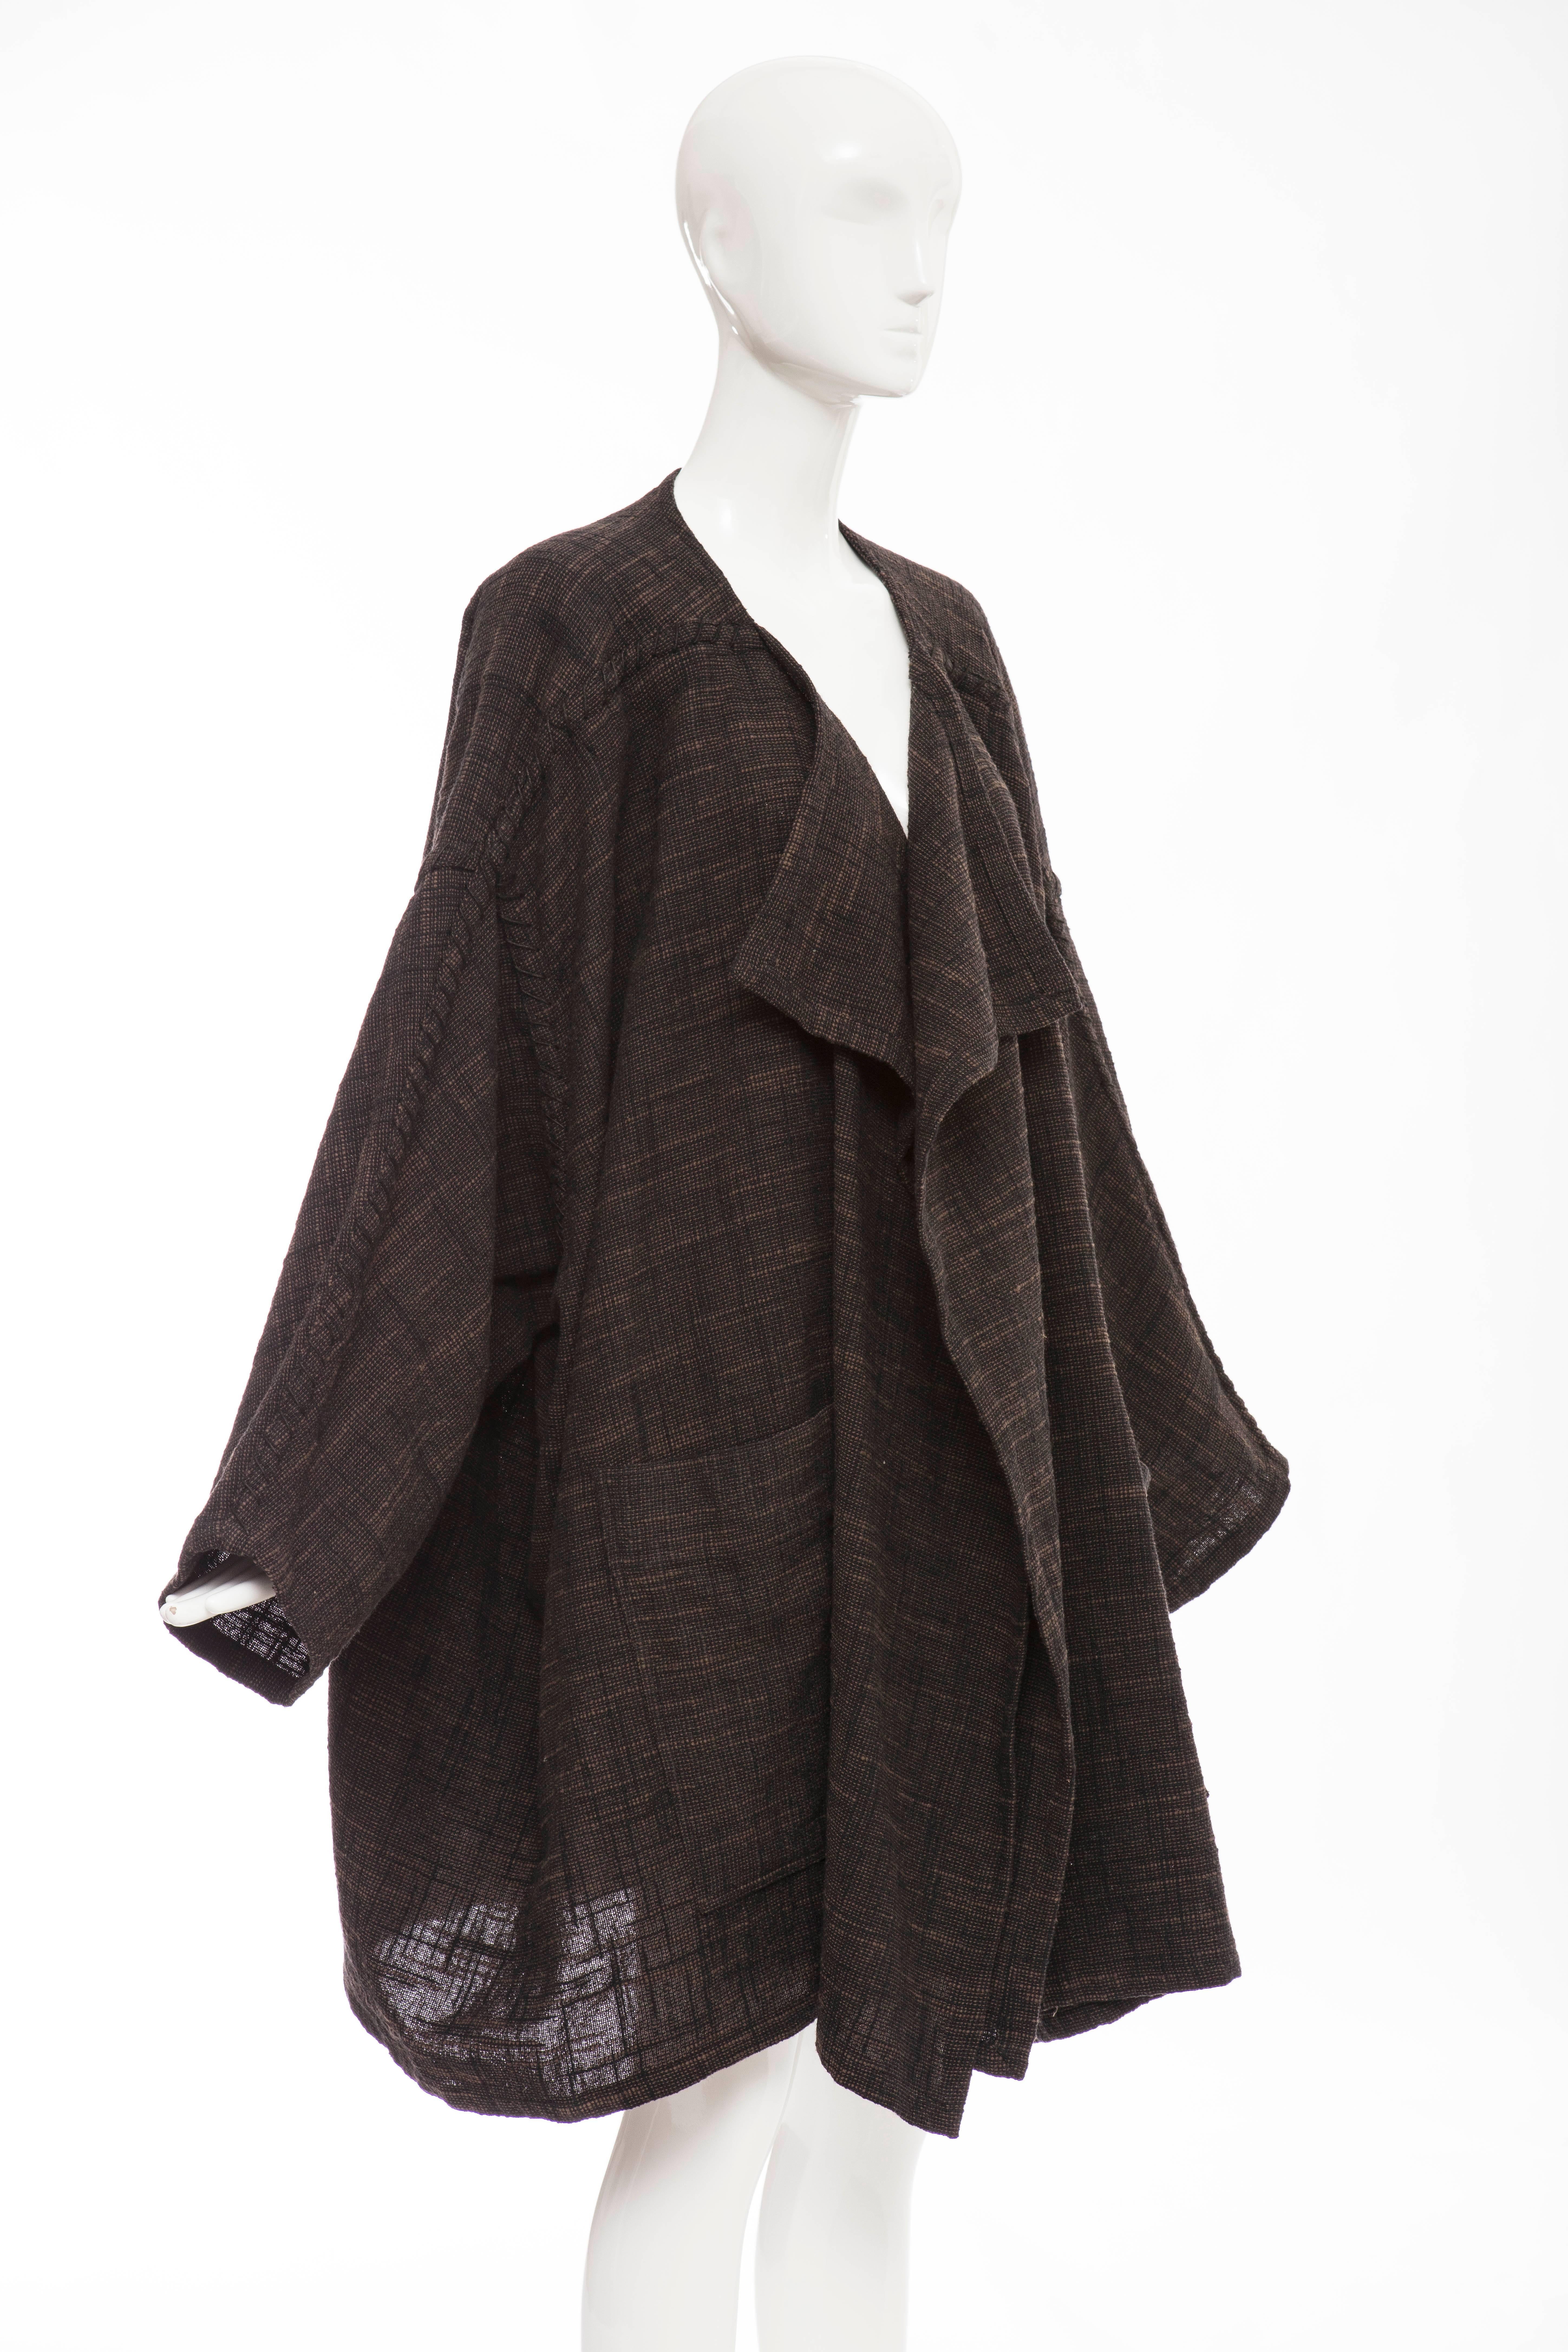 Women's or Men's Issey Miyake Plantation Cotton Wool Nylon Woven Open Front Jacket, Circa 1980's